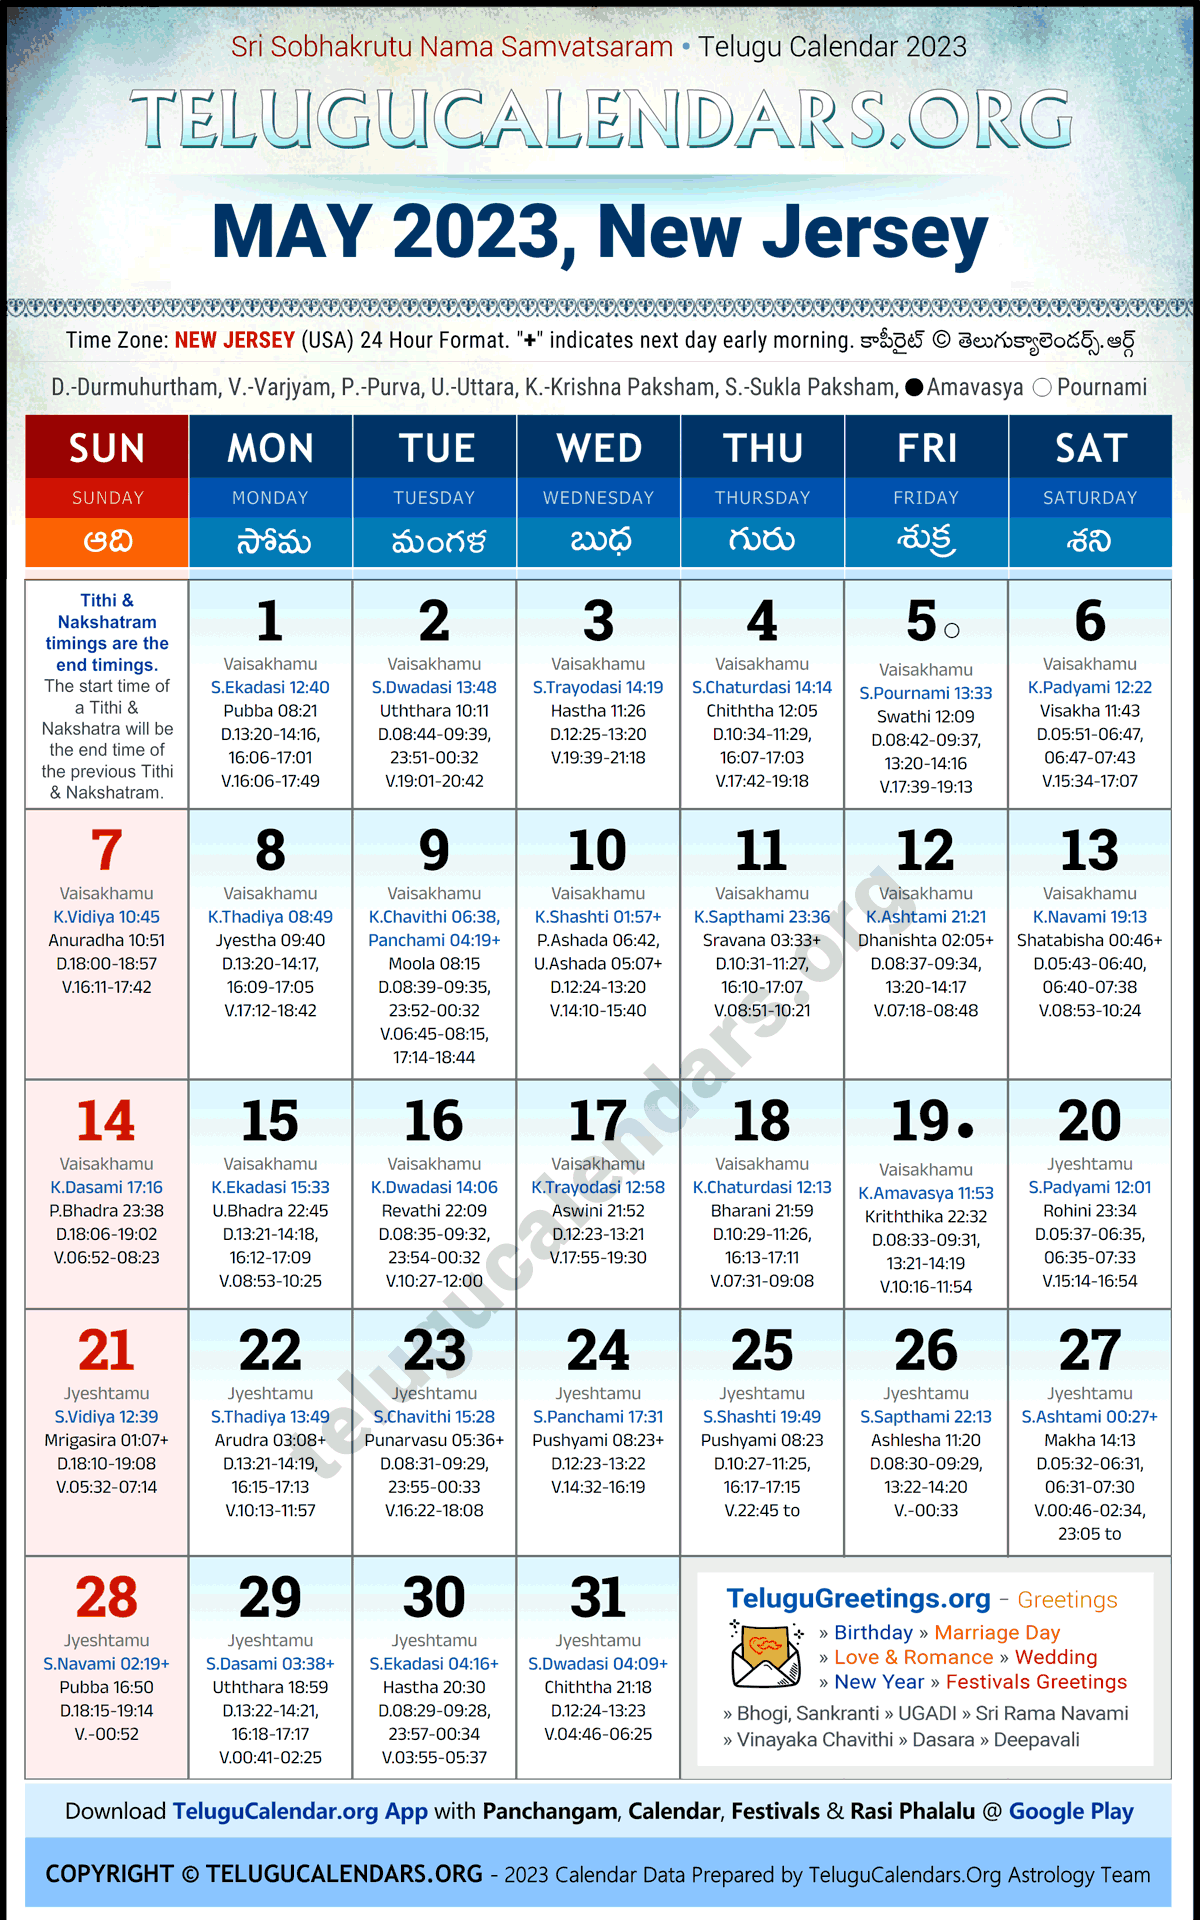 Telugu Calendar 2023 May Festivals for New Jersey